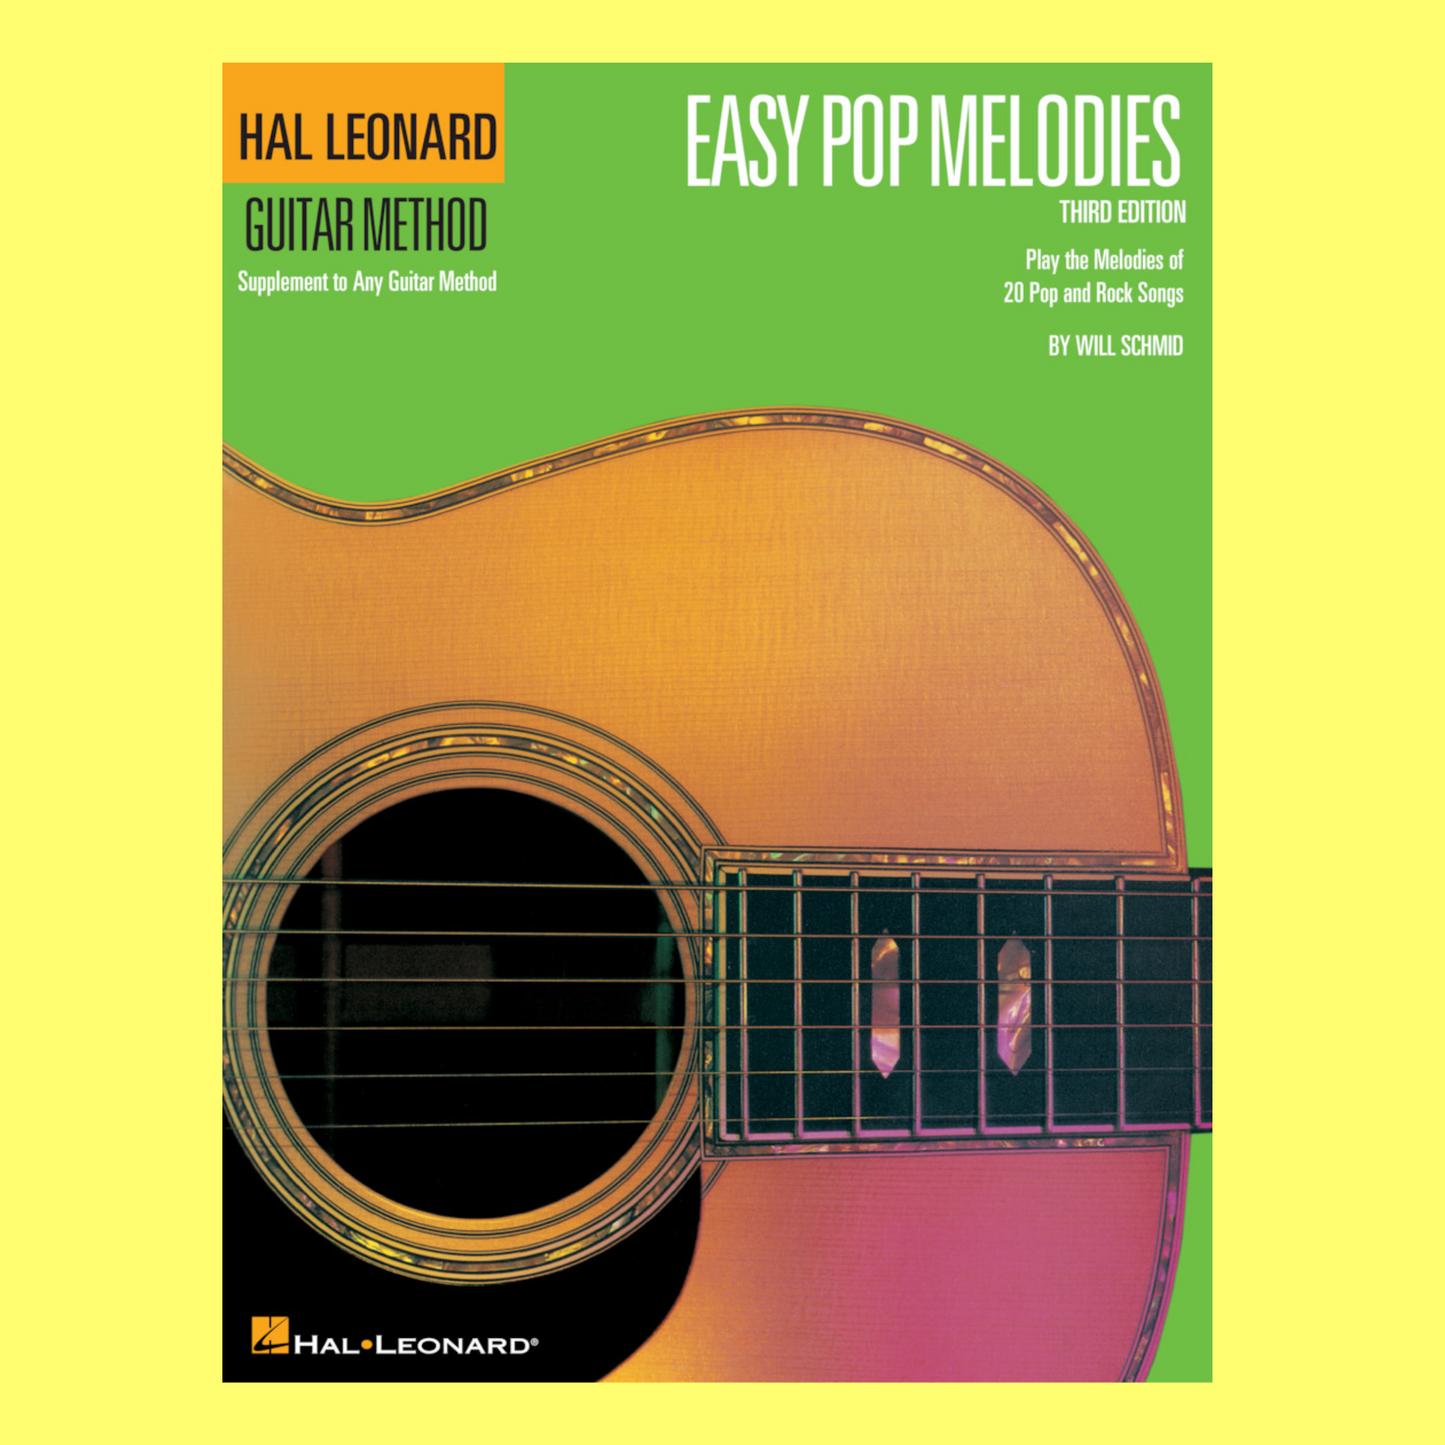 Hal Leonard Guitar Method - Easy Pop Melodies Book (3rd Edition)